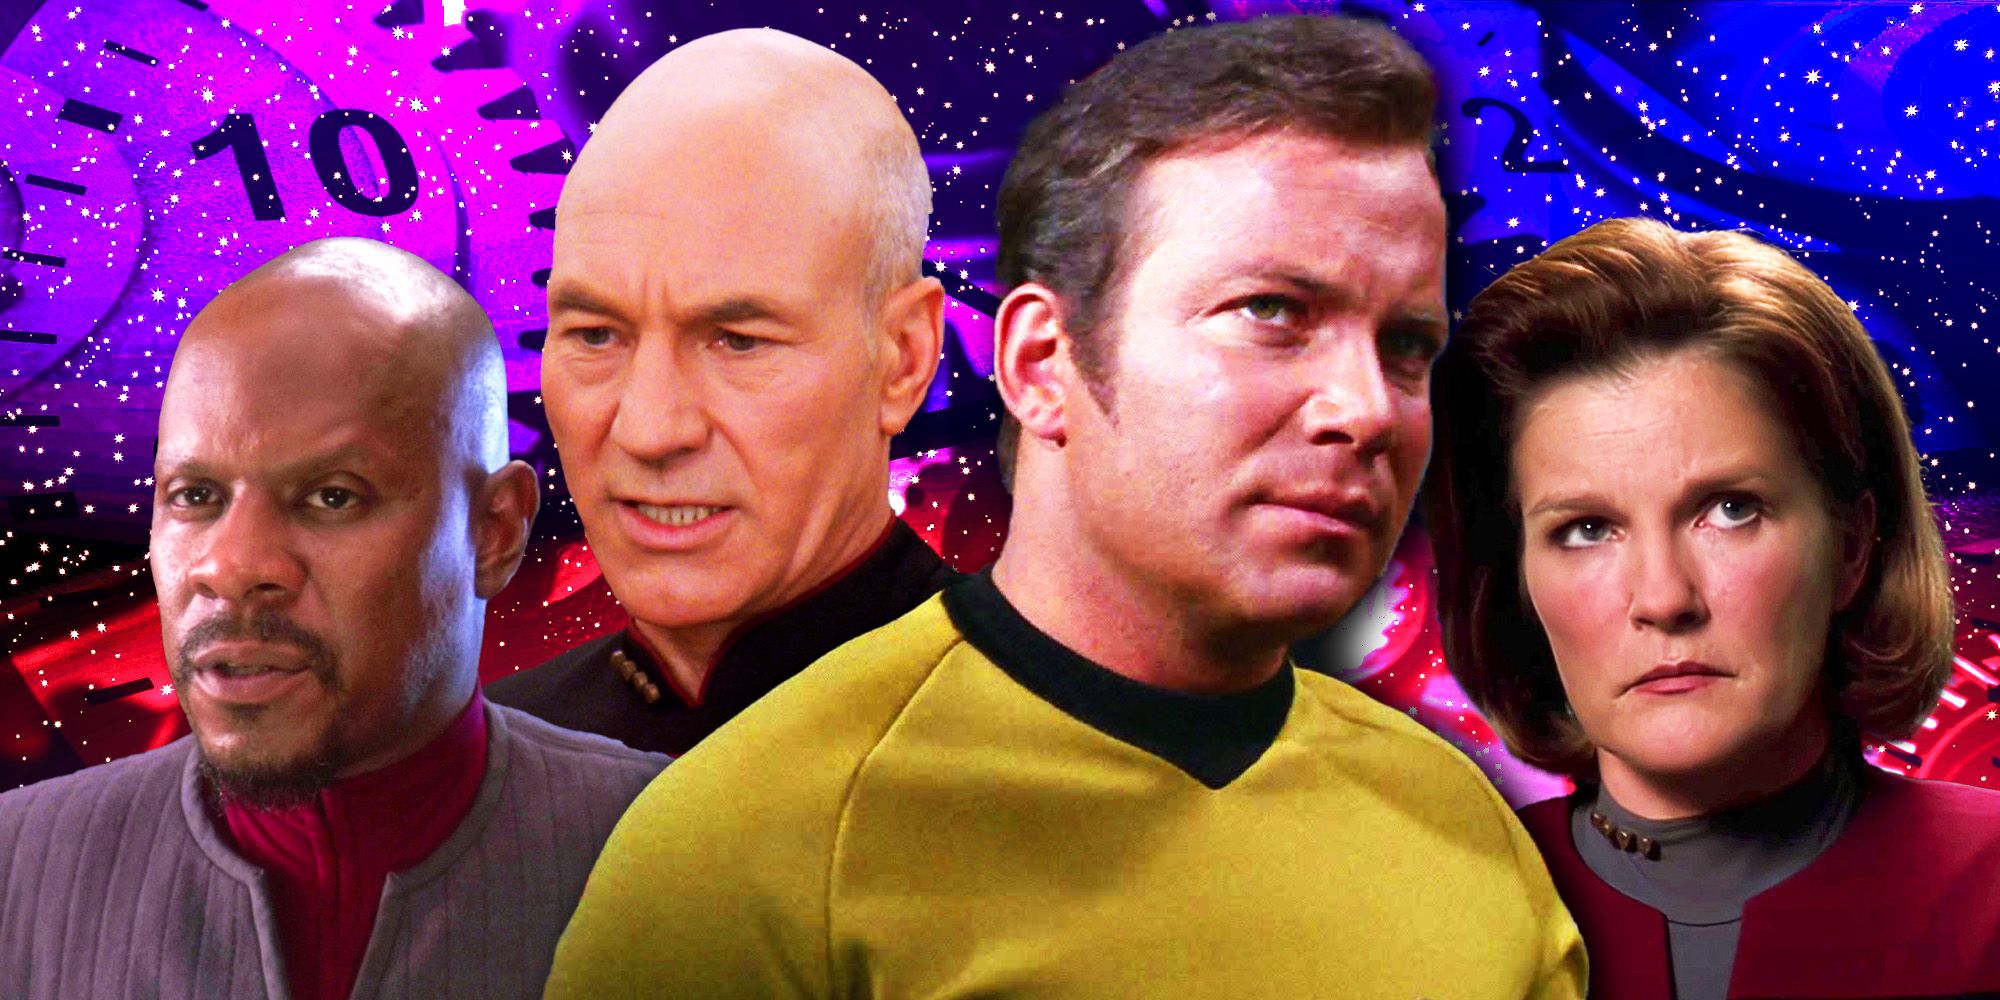 Collage of Captain Sisko, Captain Picard, Captain Kirk, and Captain Janeway from the Star Trek franchise.